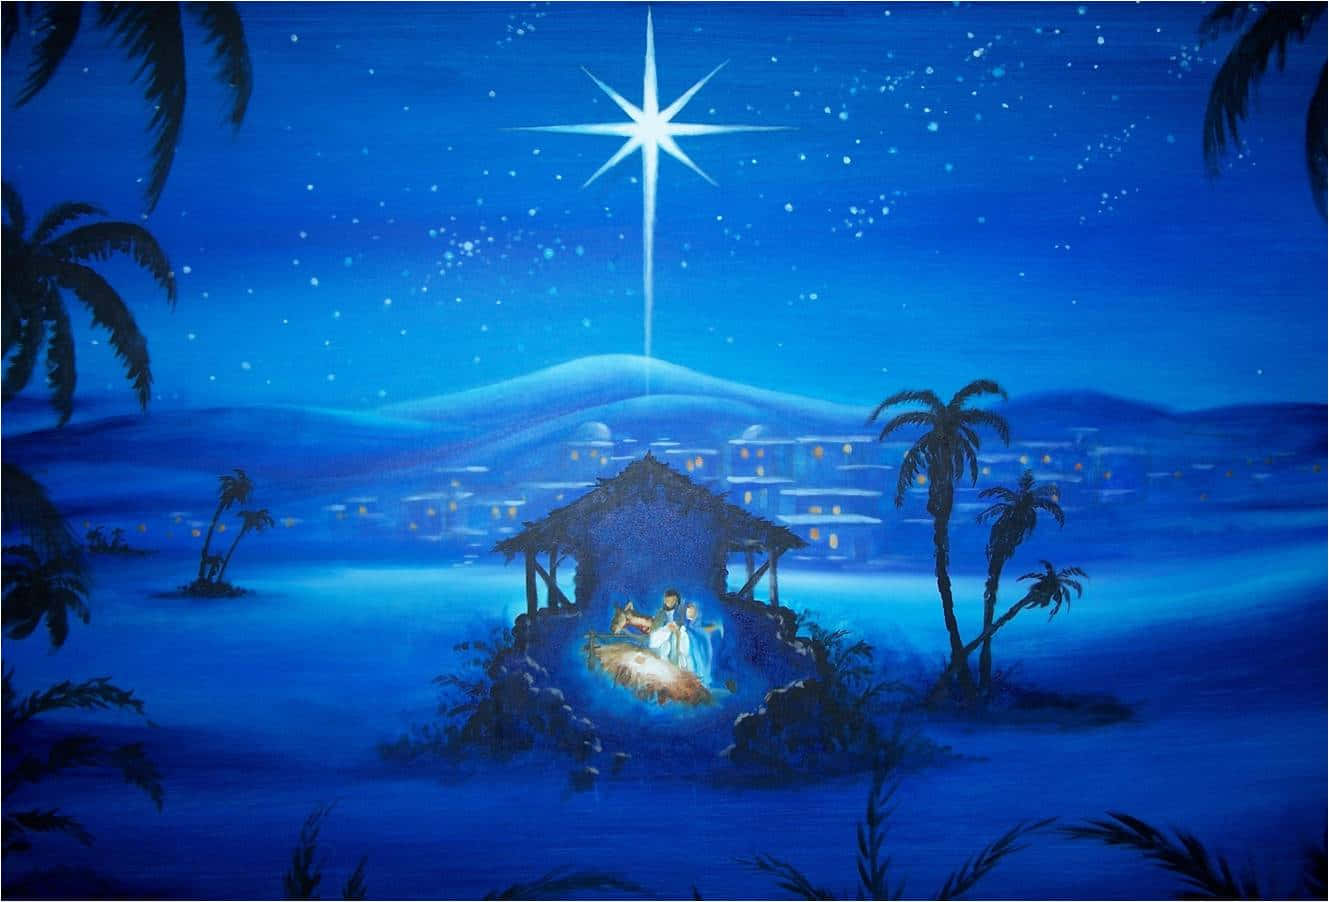 Celebrating Jesus' Birth at Christmas Wallpaper